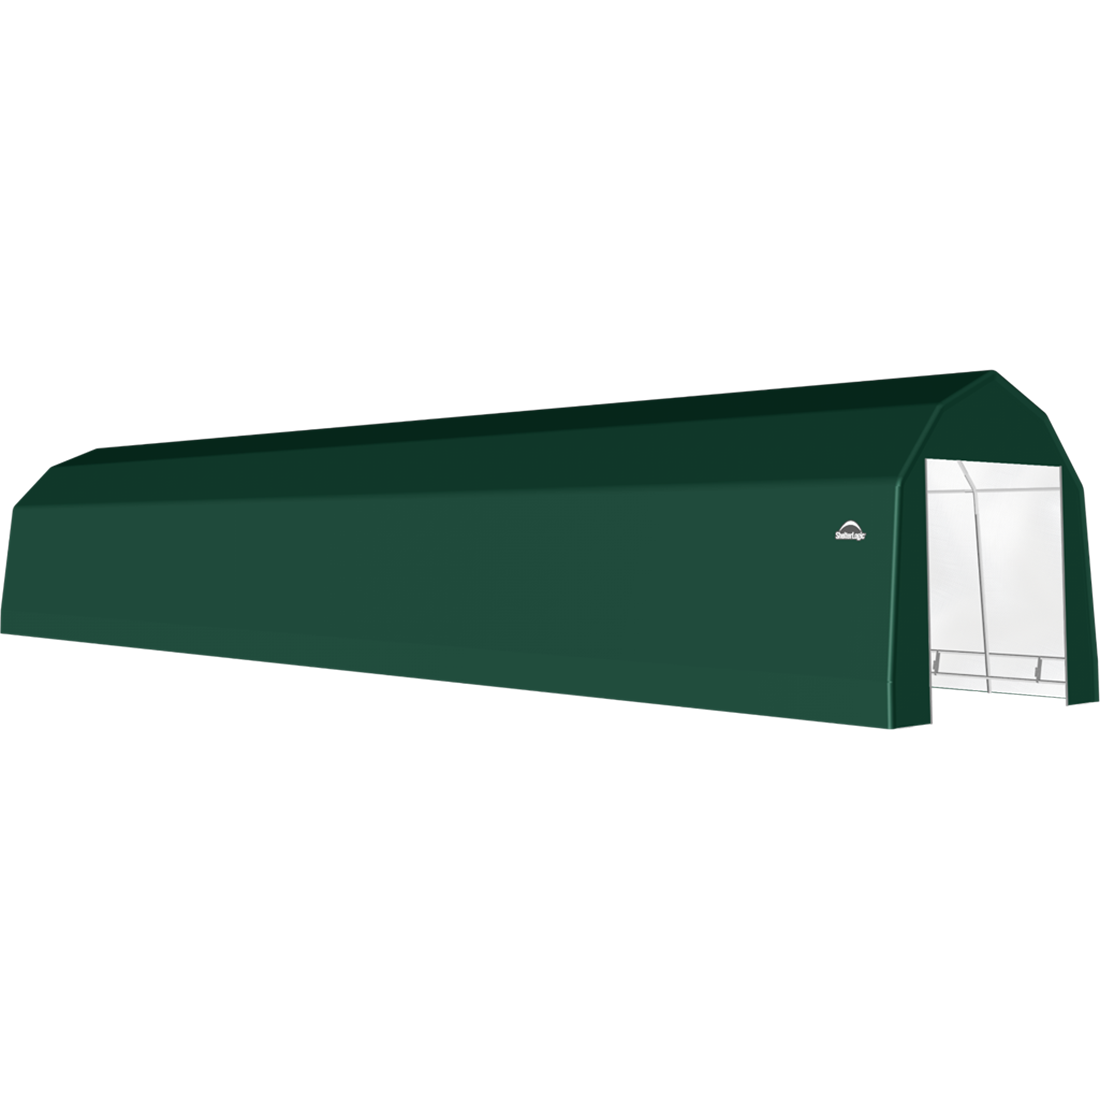 ShelterTech SP Series Barn Shelter, 12 ft. x 64 ft. x 11 ft. Heavy Duty PVC 14.5 oz. Green